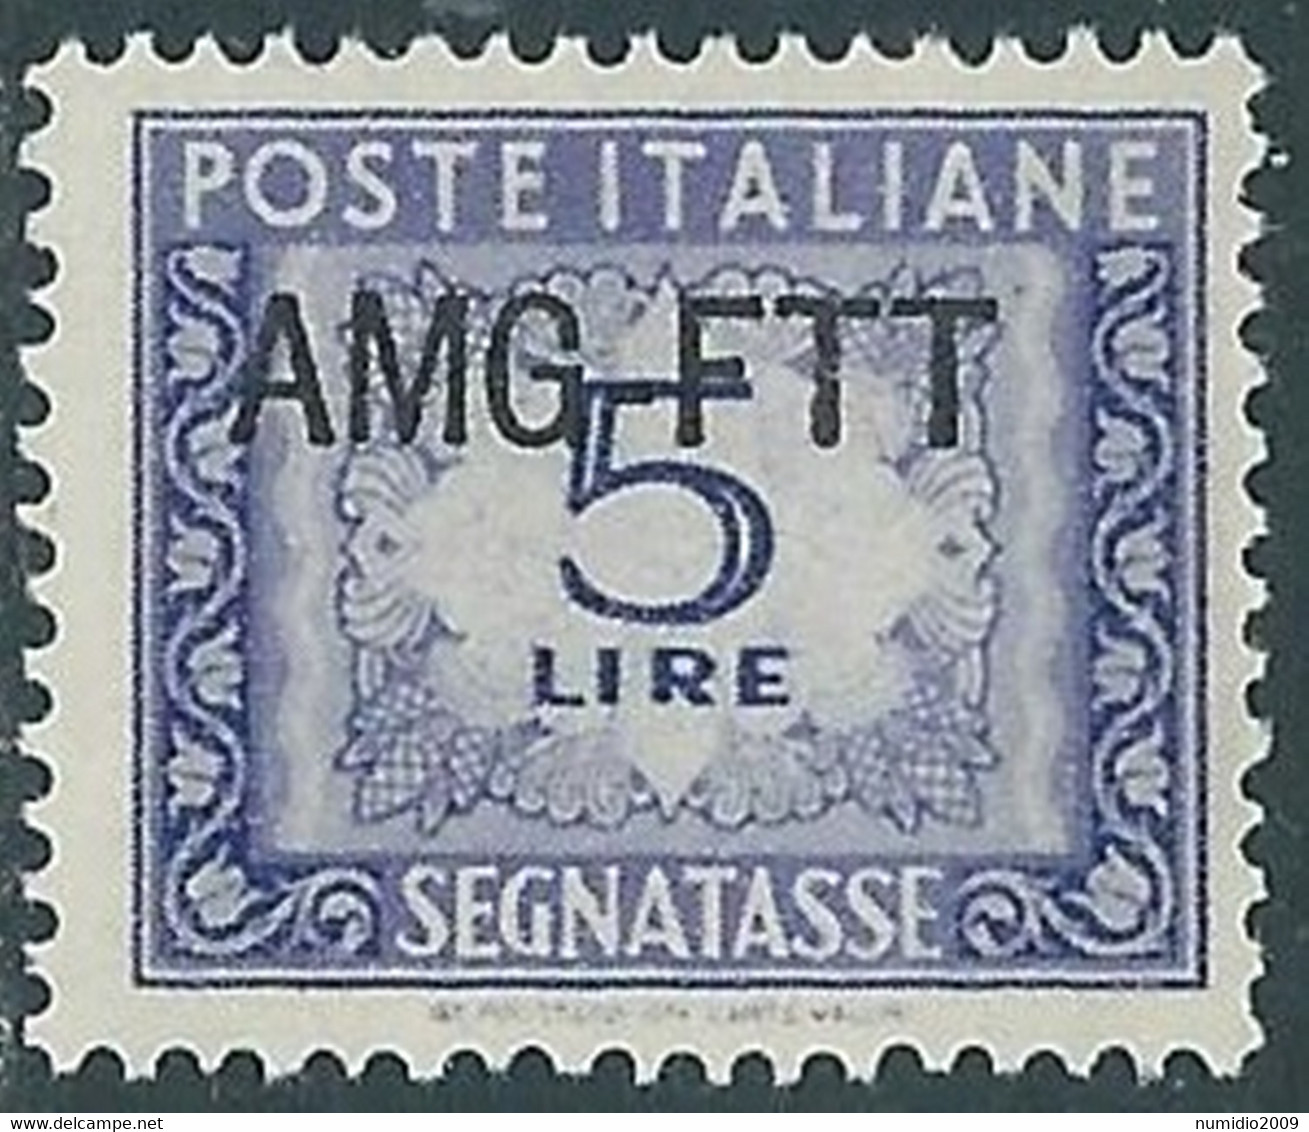 1949-54 TRIESTE A SEGNATASSE 5 LIRE MNH ** - RE11-2 - Postage Due